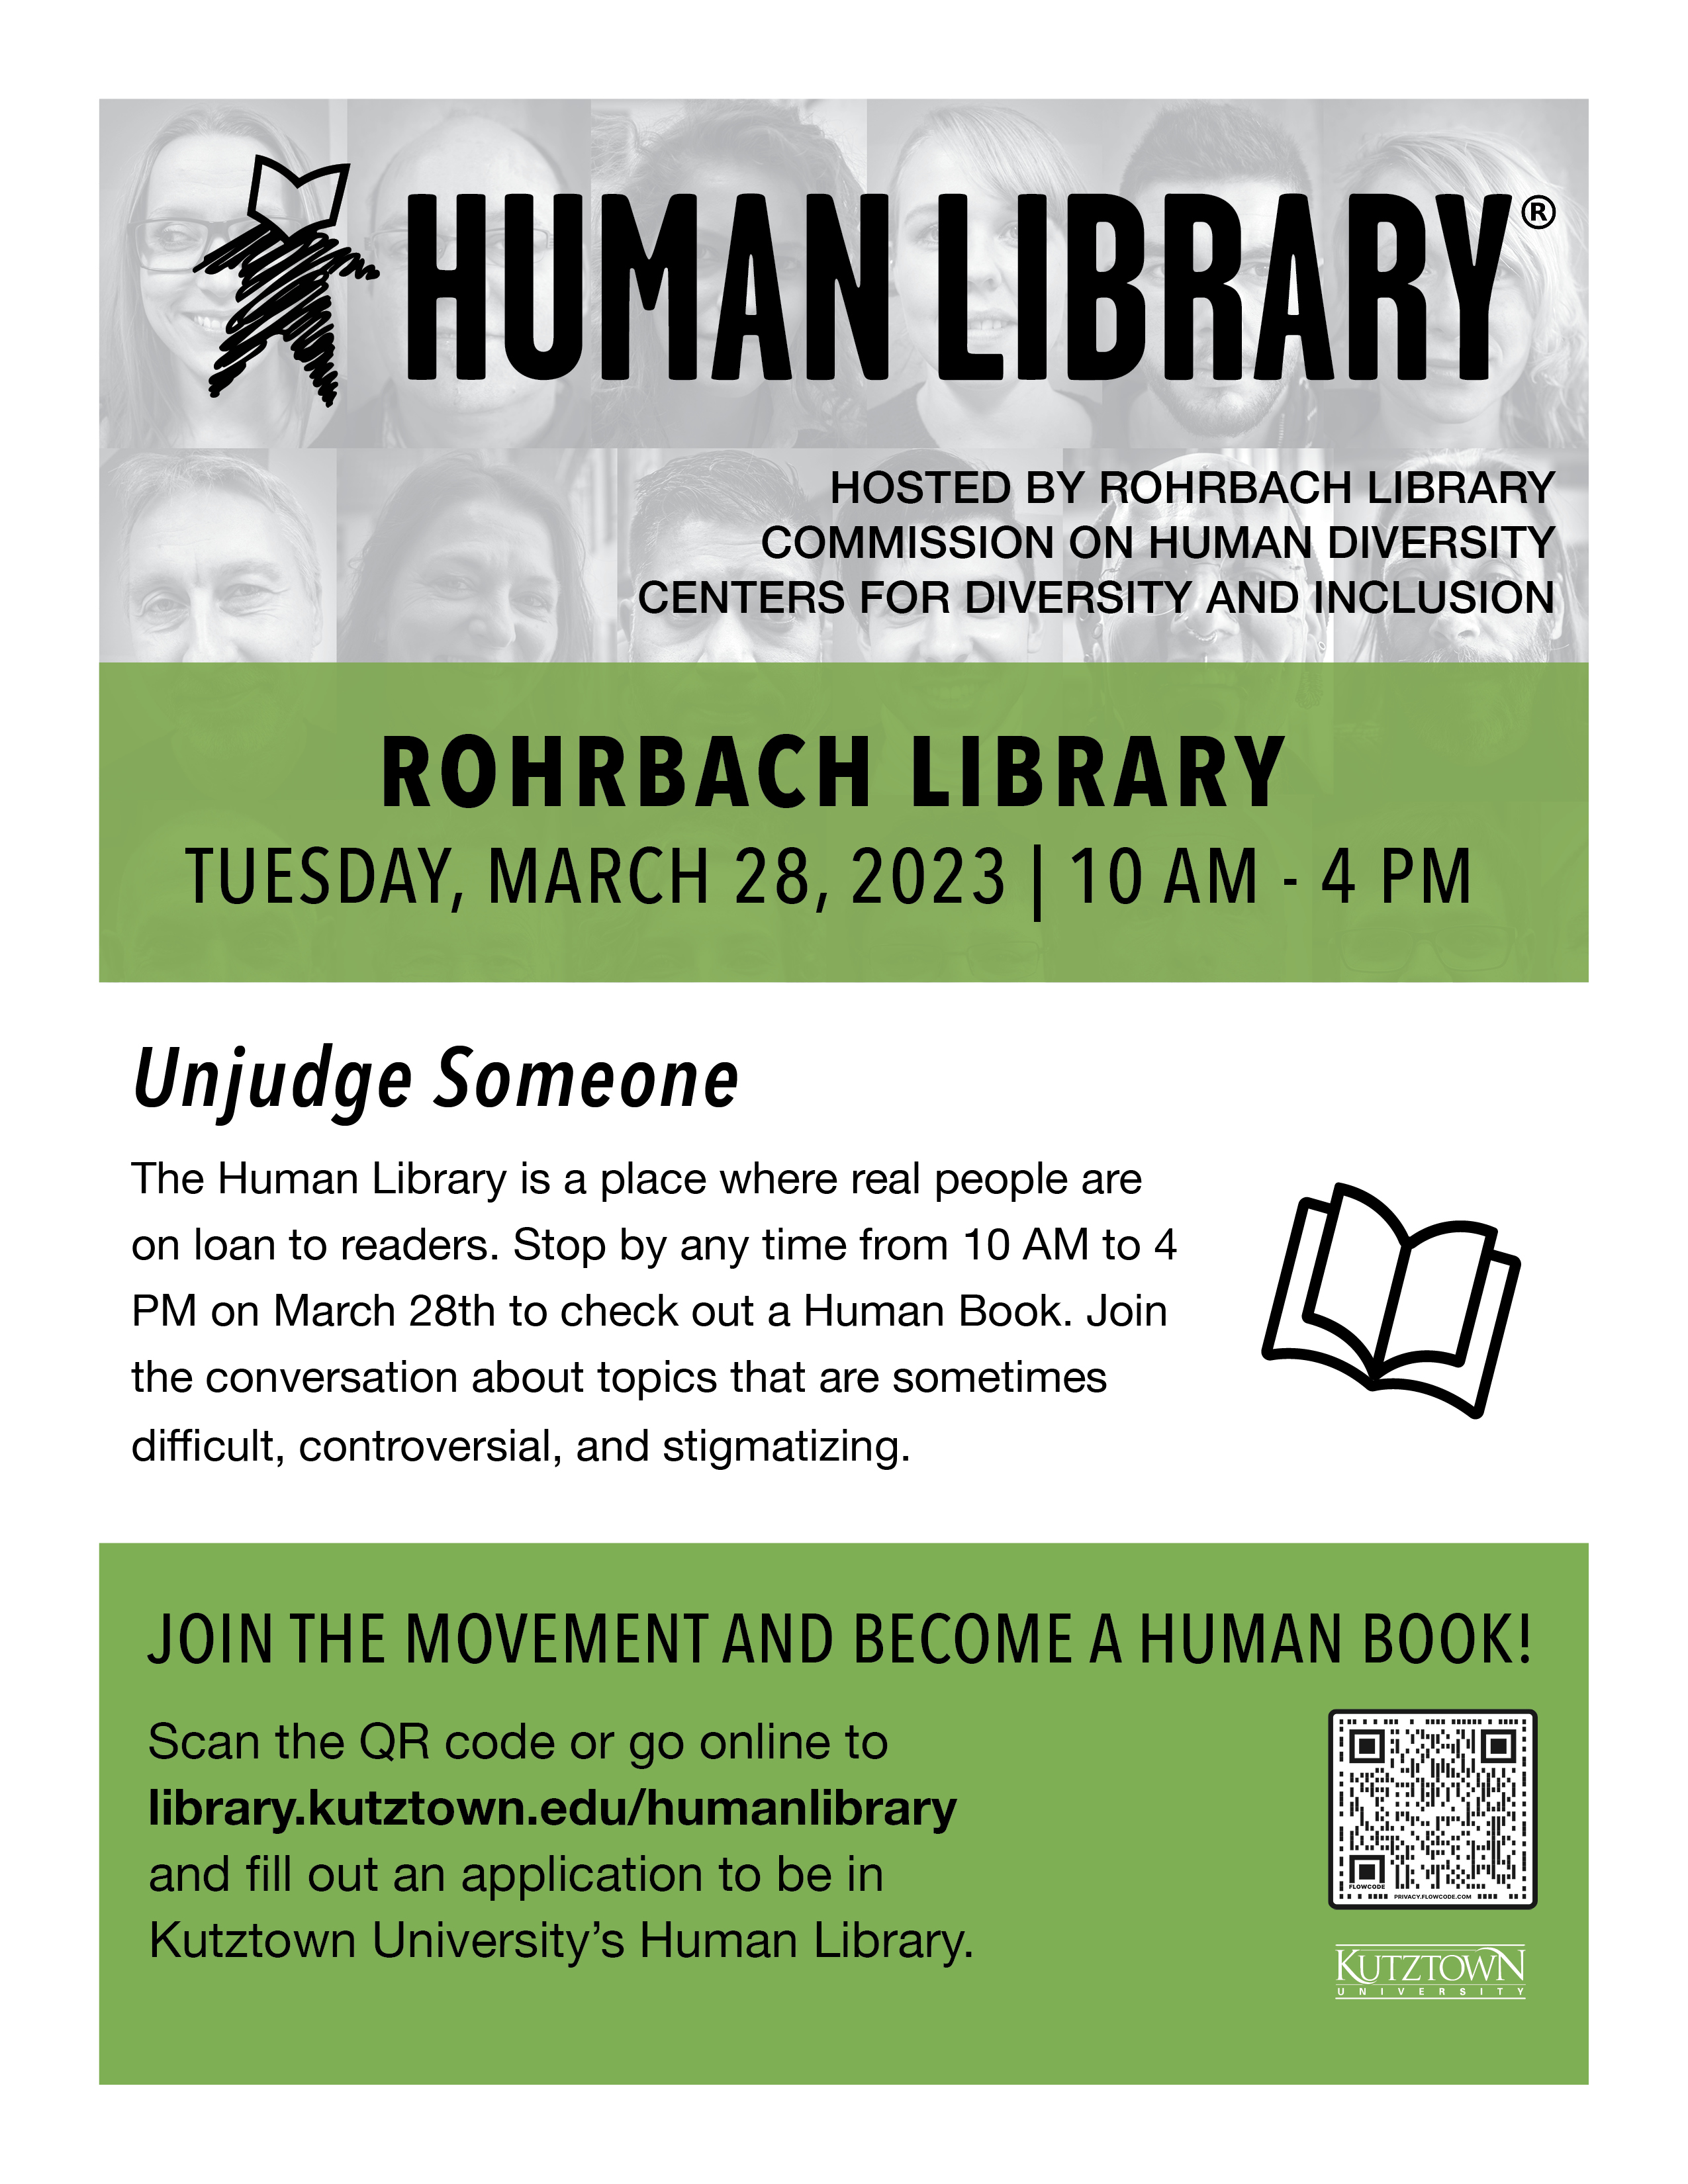 Human Library at Rohrbach Library